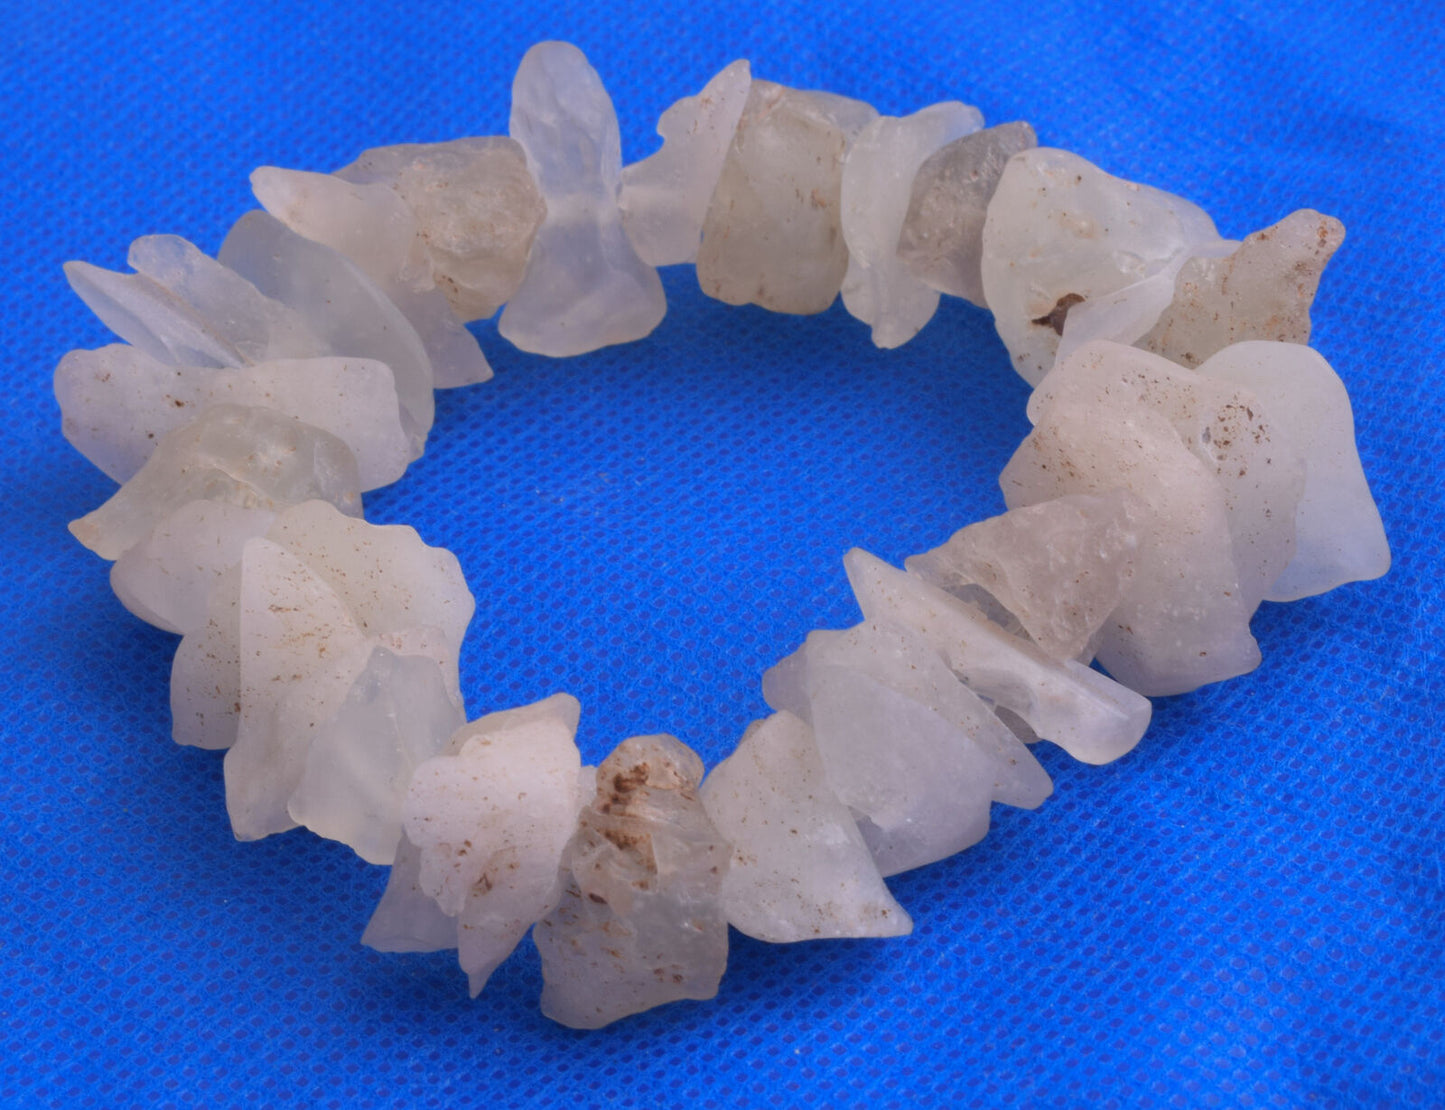 Libyan Desert glass Bracelet, desert glass from an asteroid impact, 59 grams